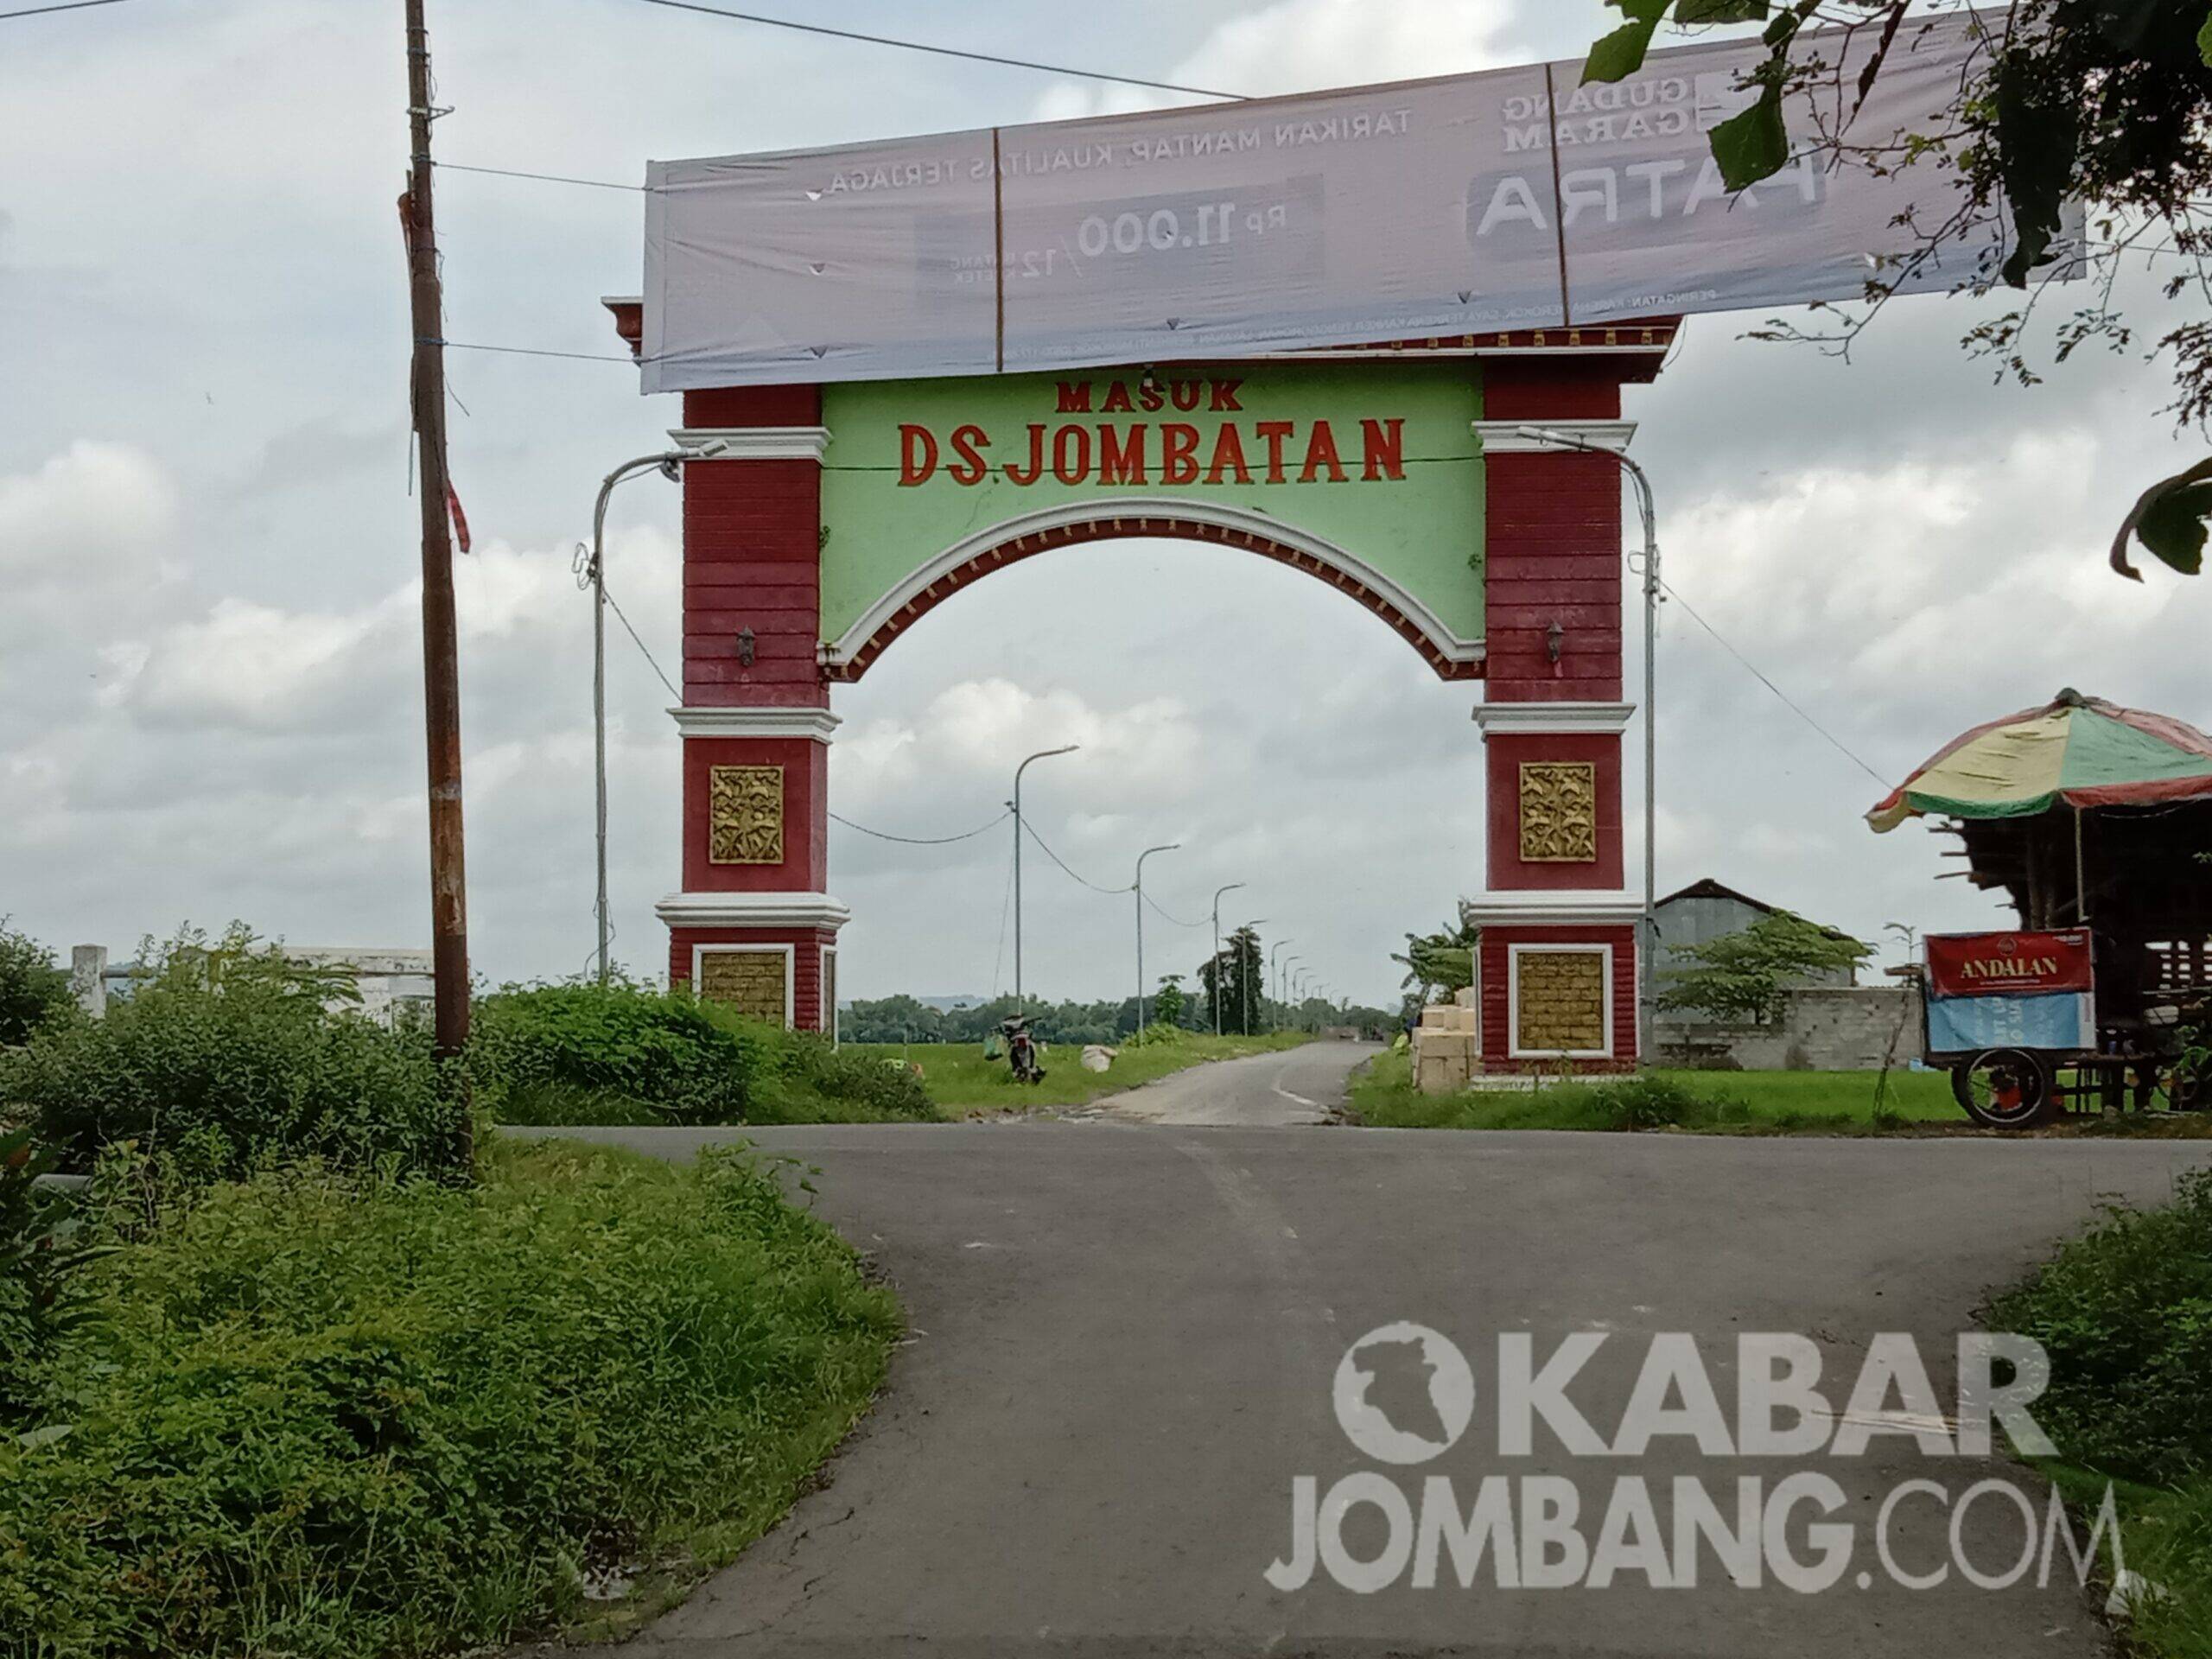 Gapura Desa Jombatan Kecamatan Kesamben Kabupaten Jombang. Kabarjombang.com/Anggraini Dwi/